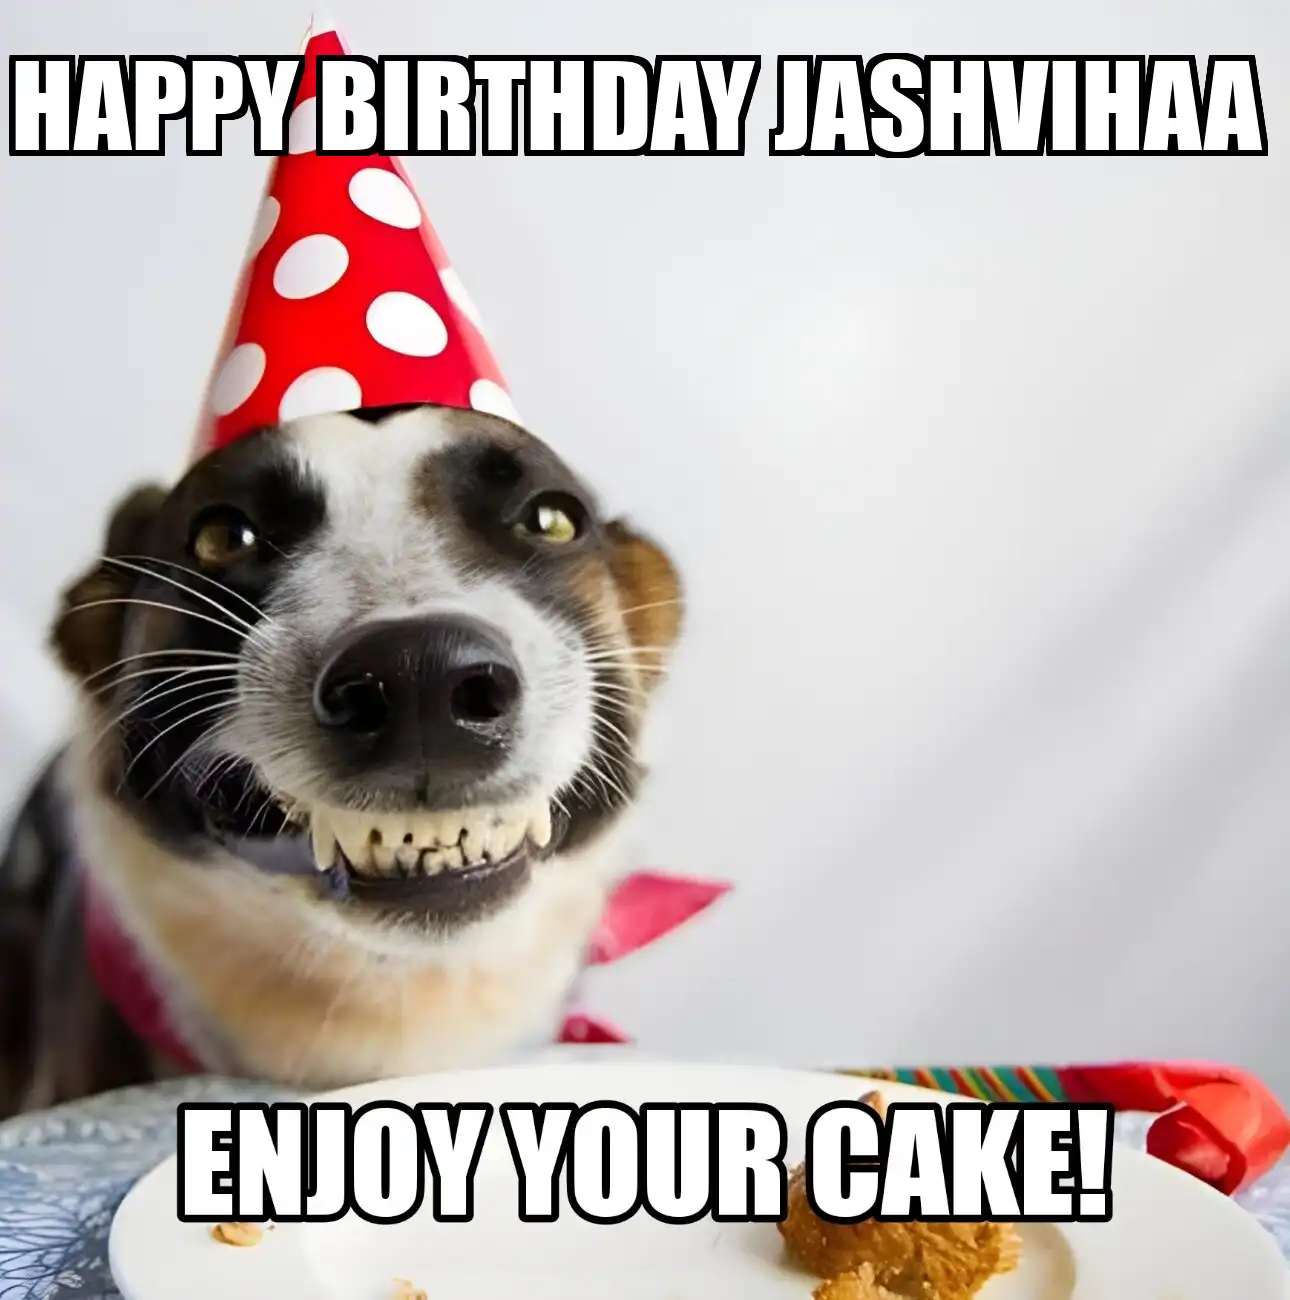 Happy Birthday Jashvihaa Enjoy Your Cake Dog Meme